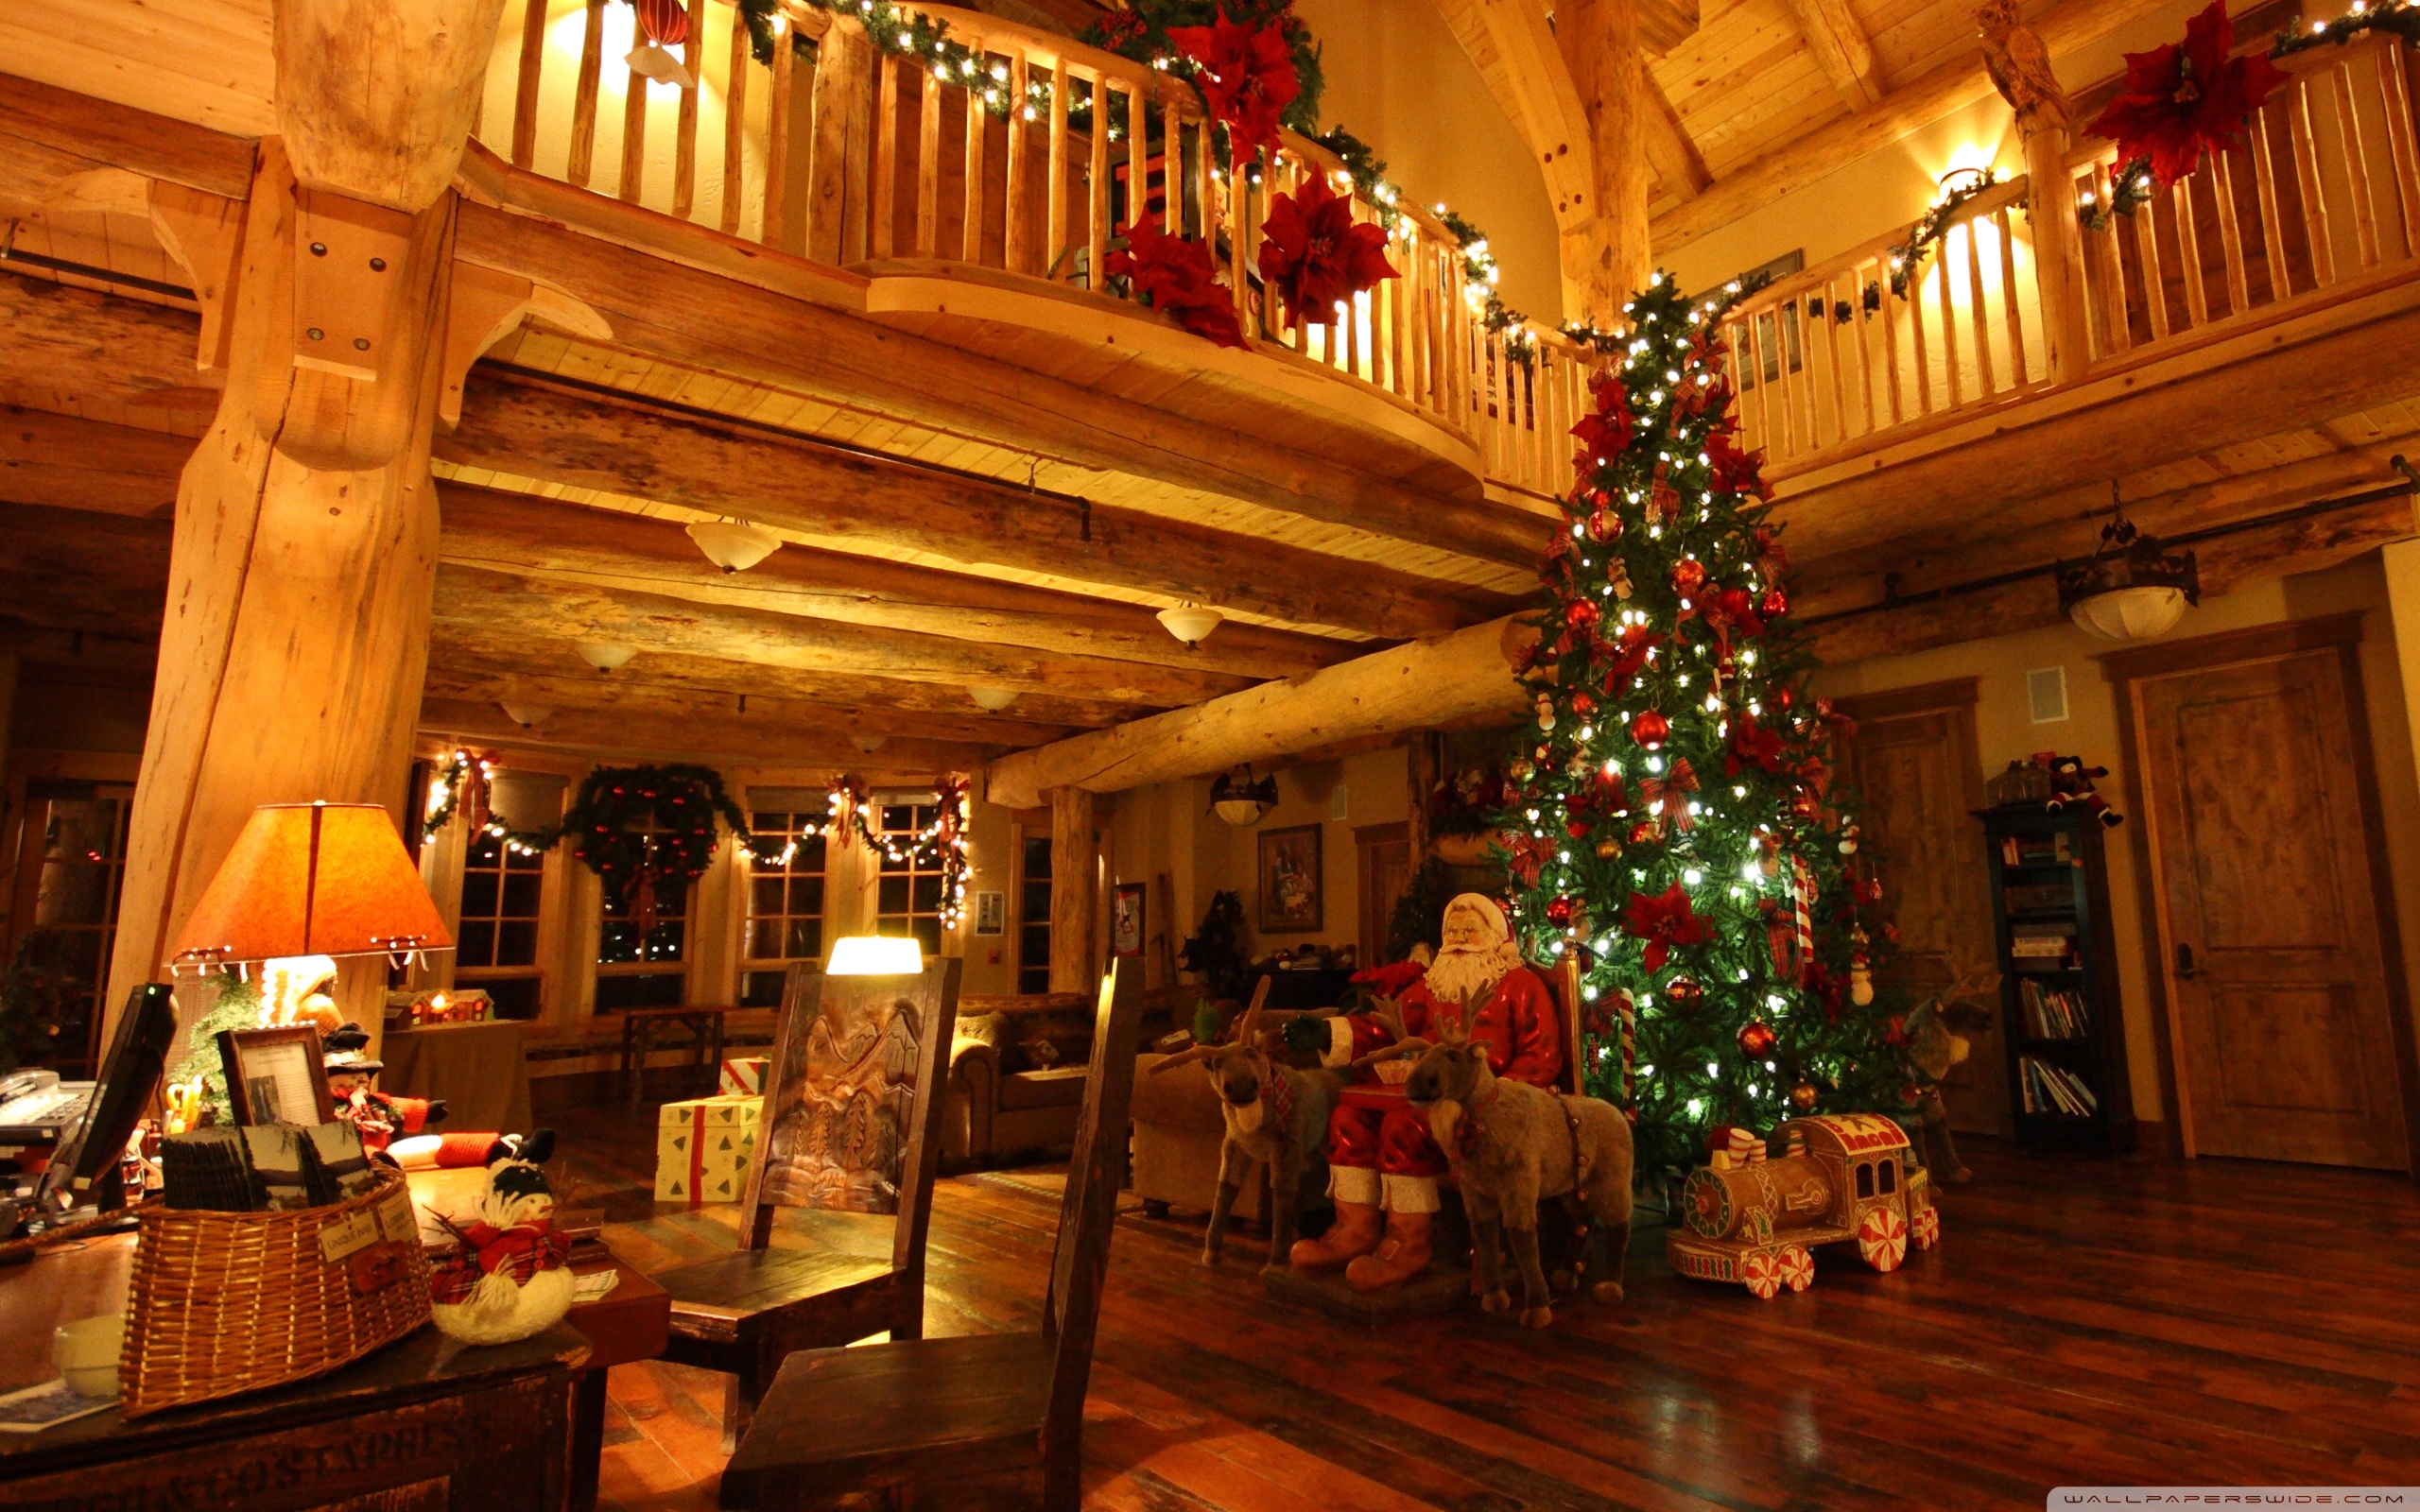 Lodge at Christmas Time Wallpaper Full HD 2560x1600 - Free